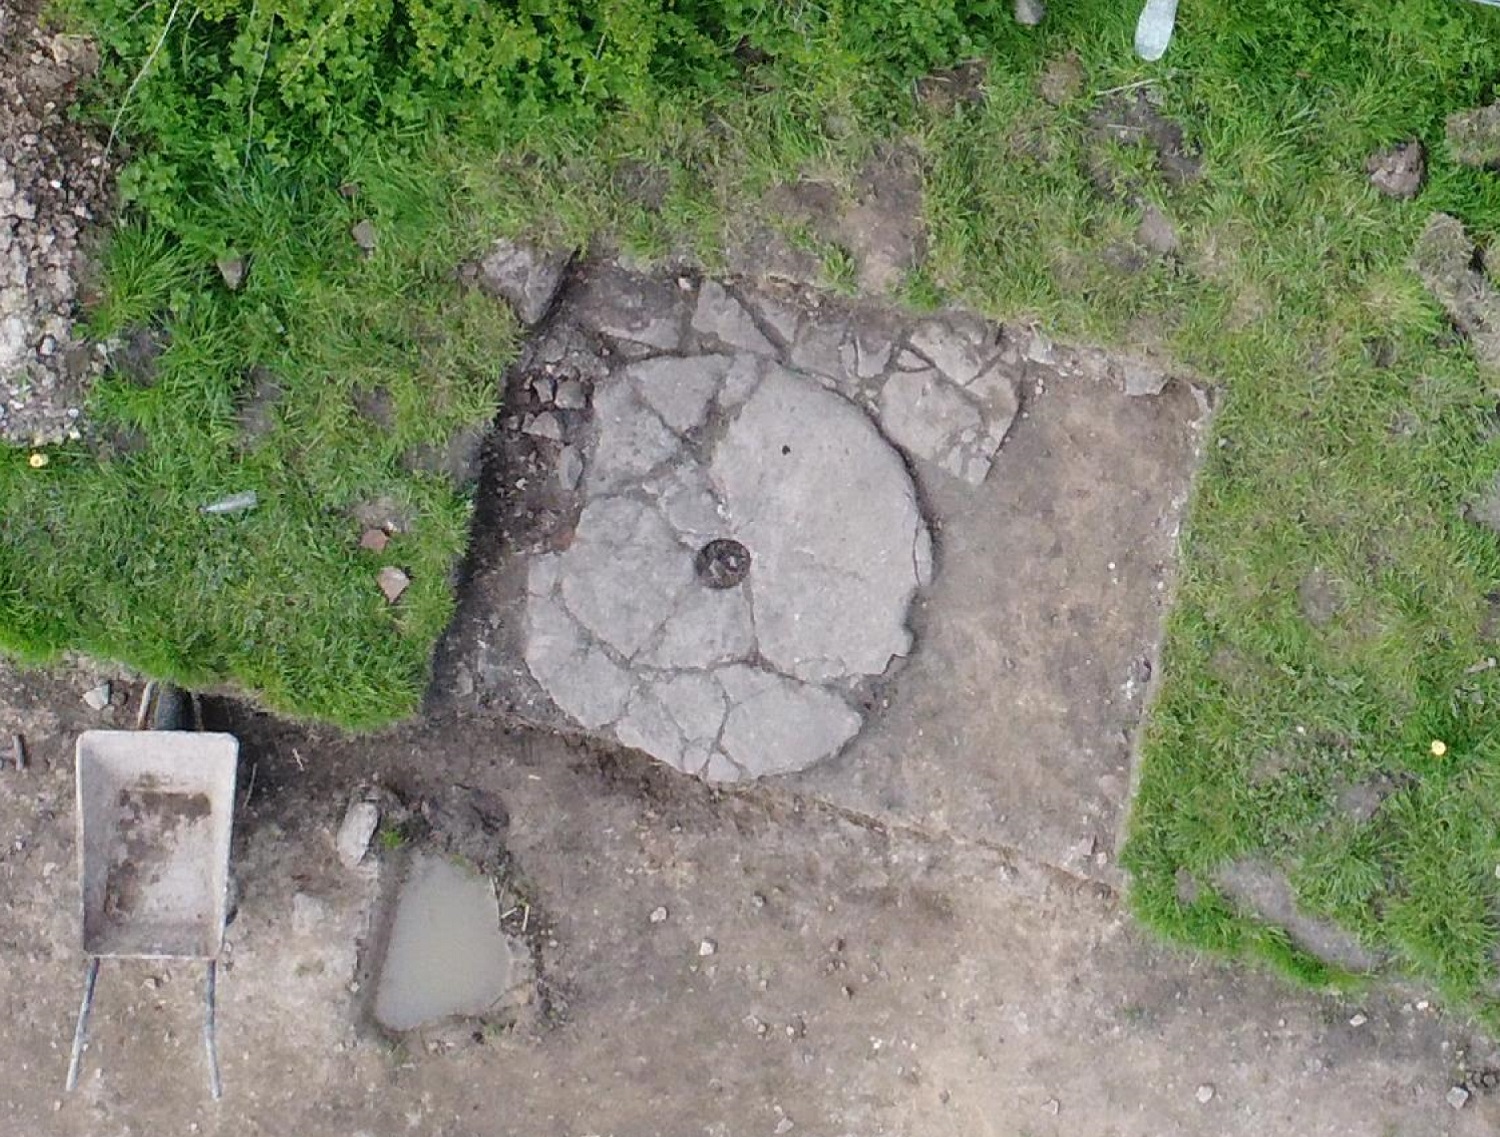 An overhead view of a circular millstone laid flat